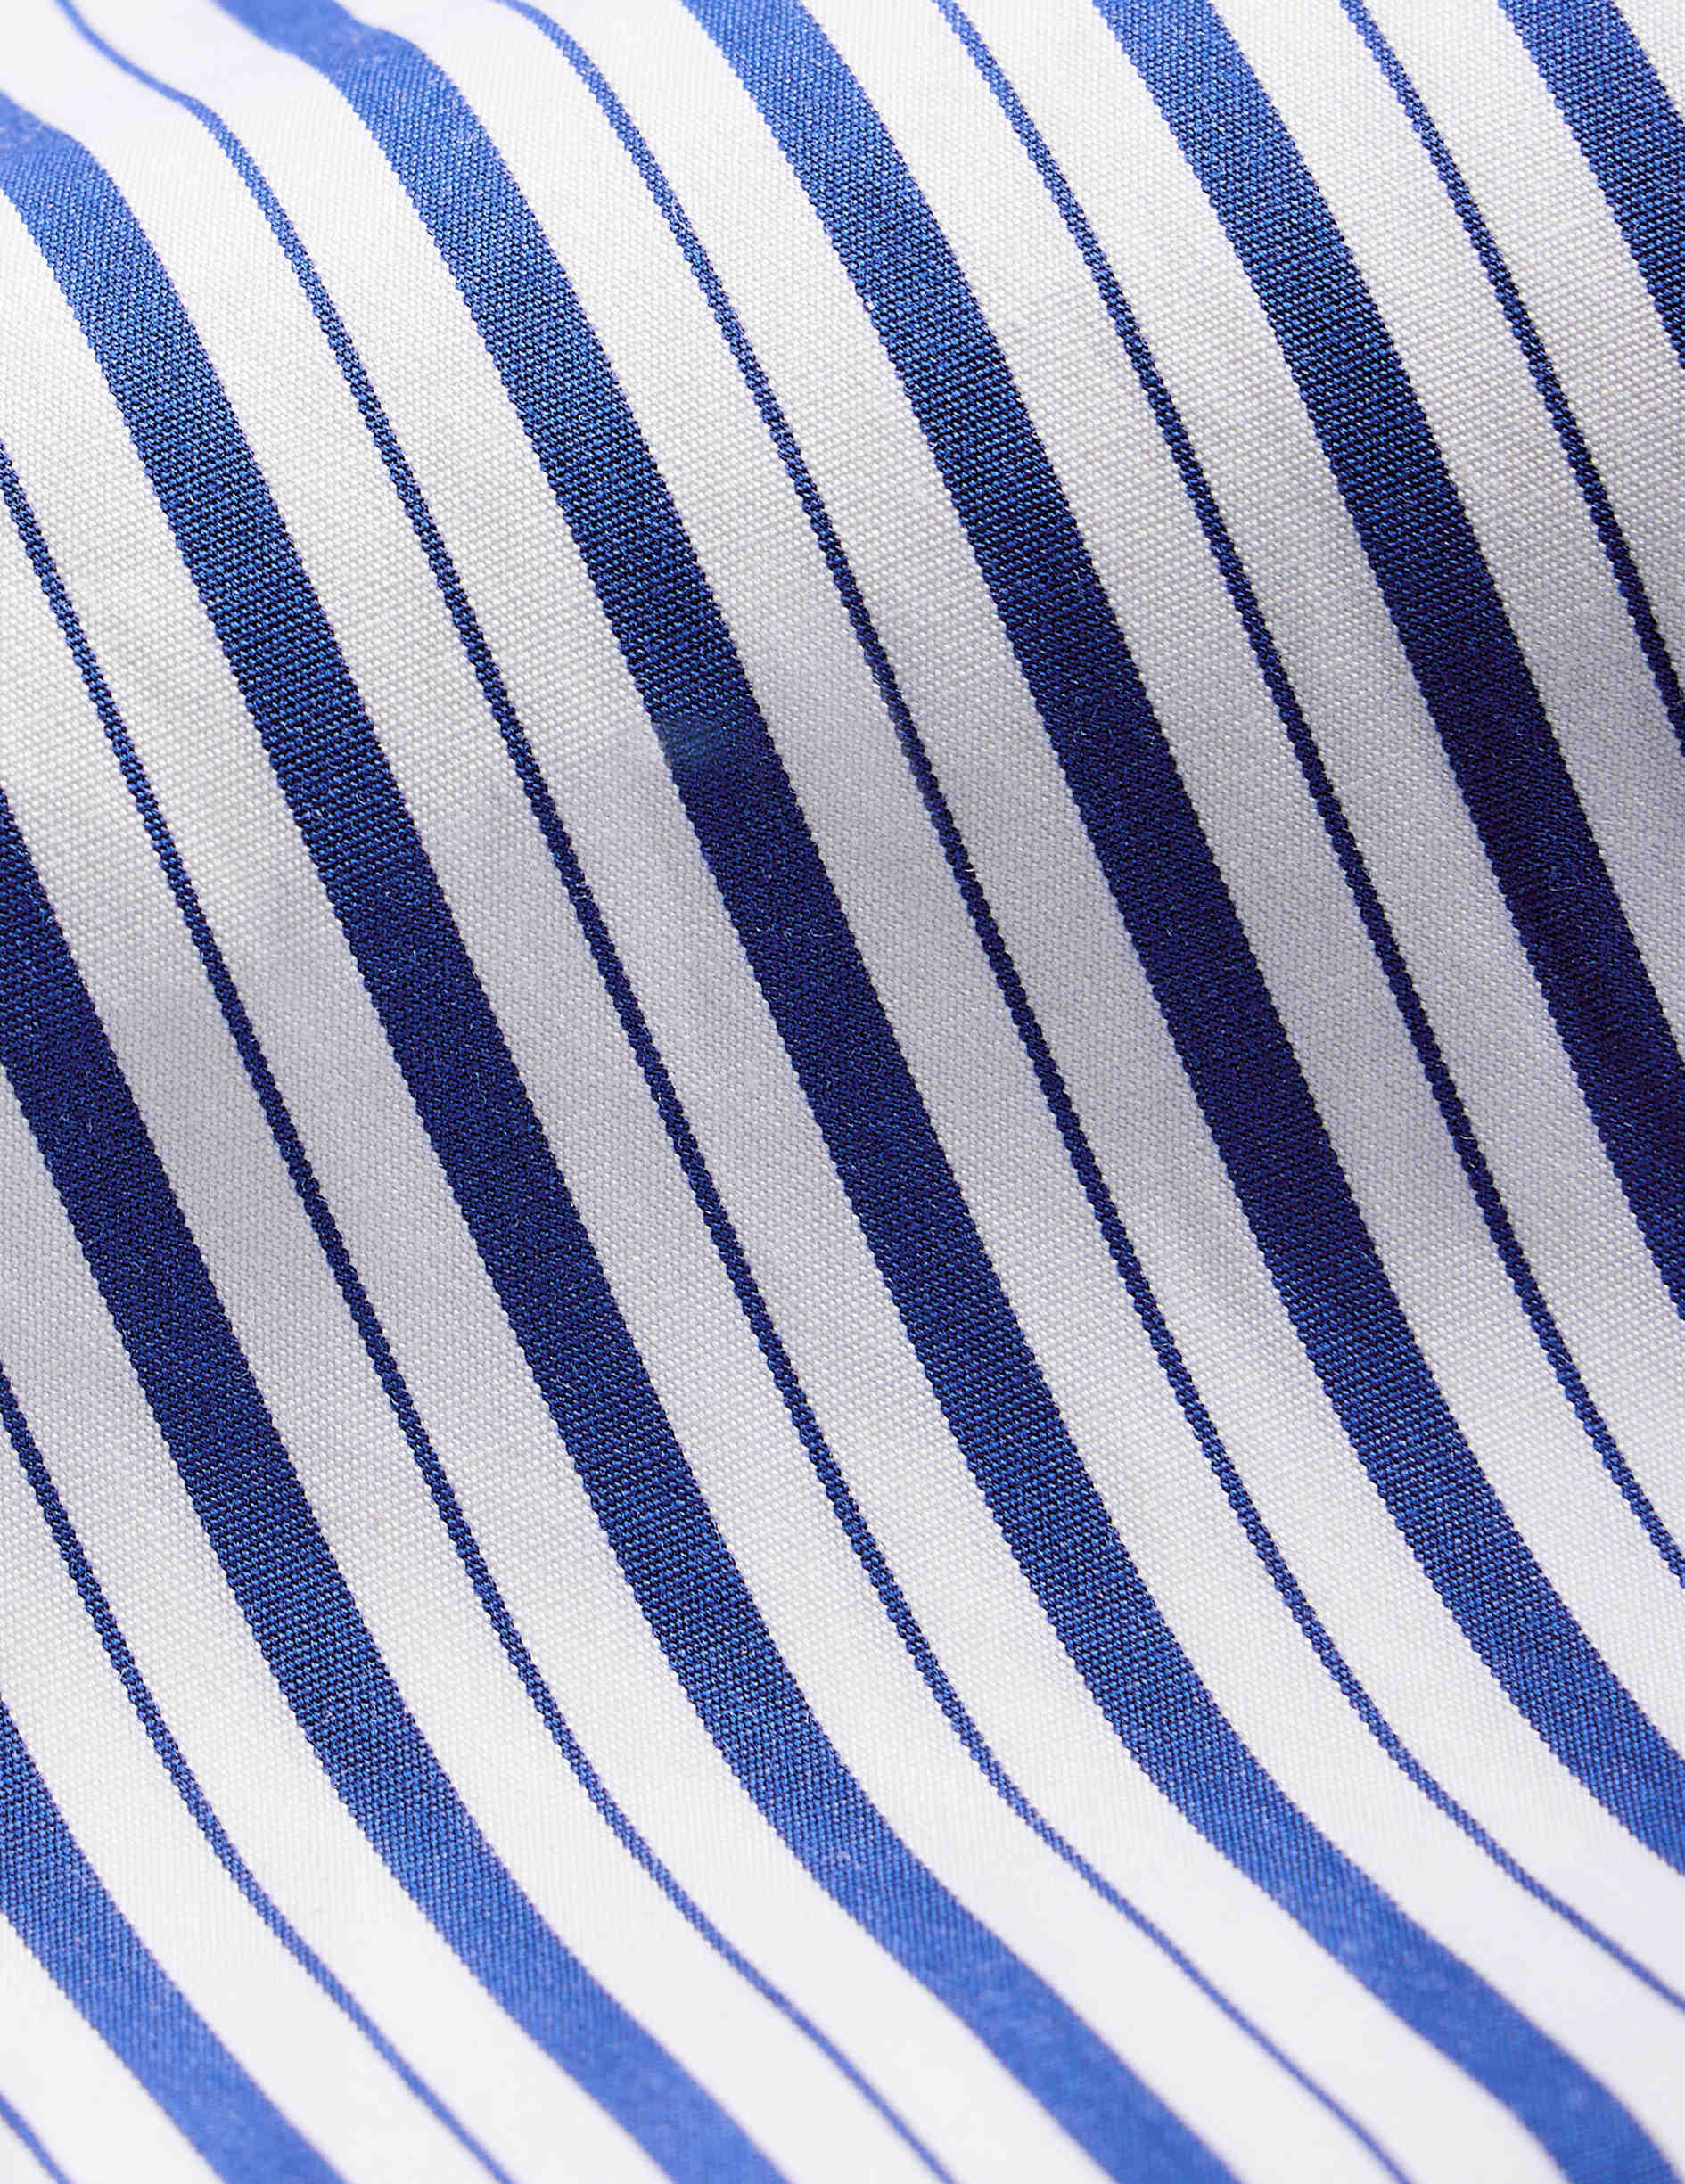 Navy blue striped semi-fitted shirt - Poplin - Figaret Collar